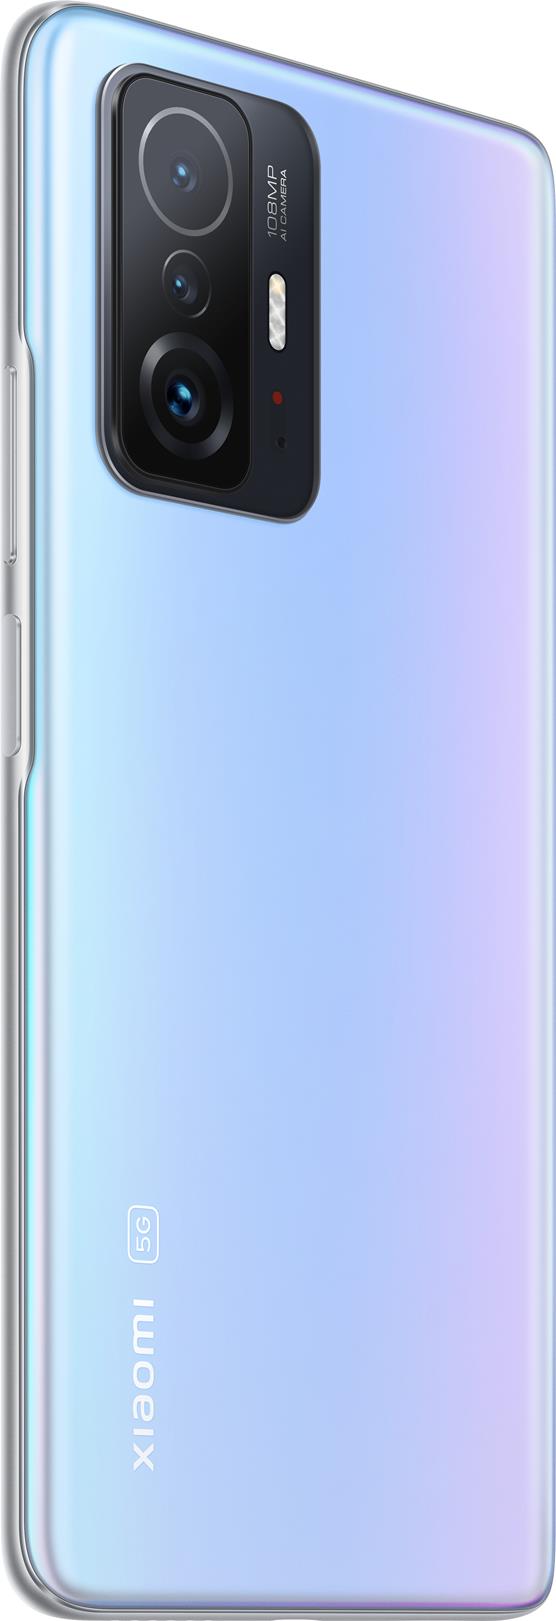 RE-9510K3S40001-PQ smartphone reacondicionado xiaomi 11t pro 8gb ram 128gb rom blue grado a